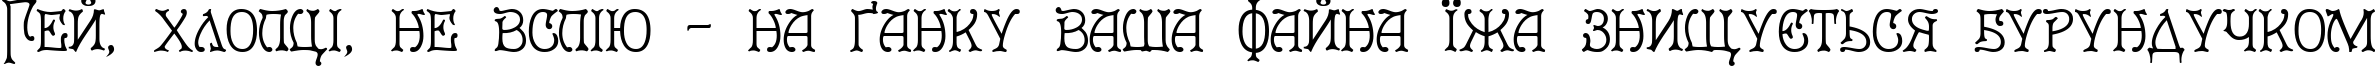 Пример написания шрифтом Le Grand текста на украинском